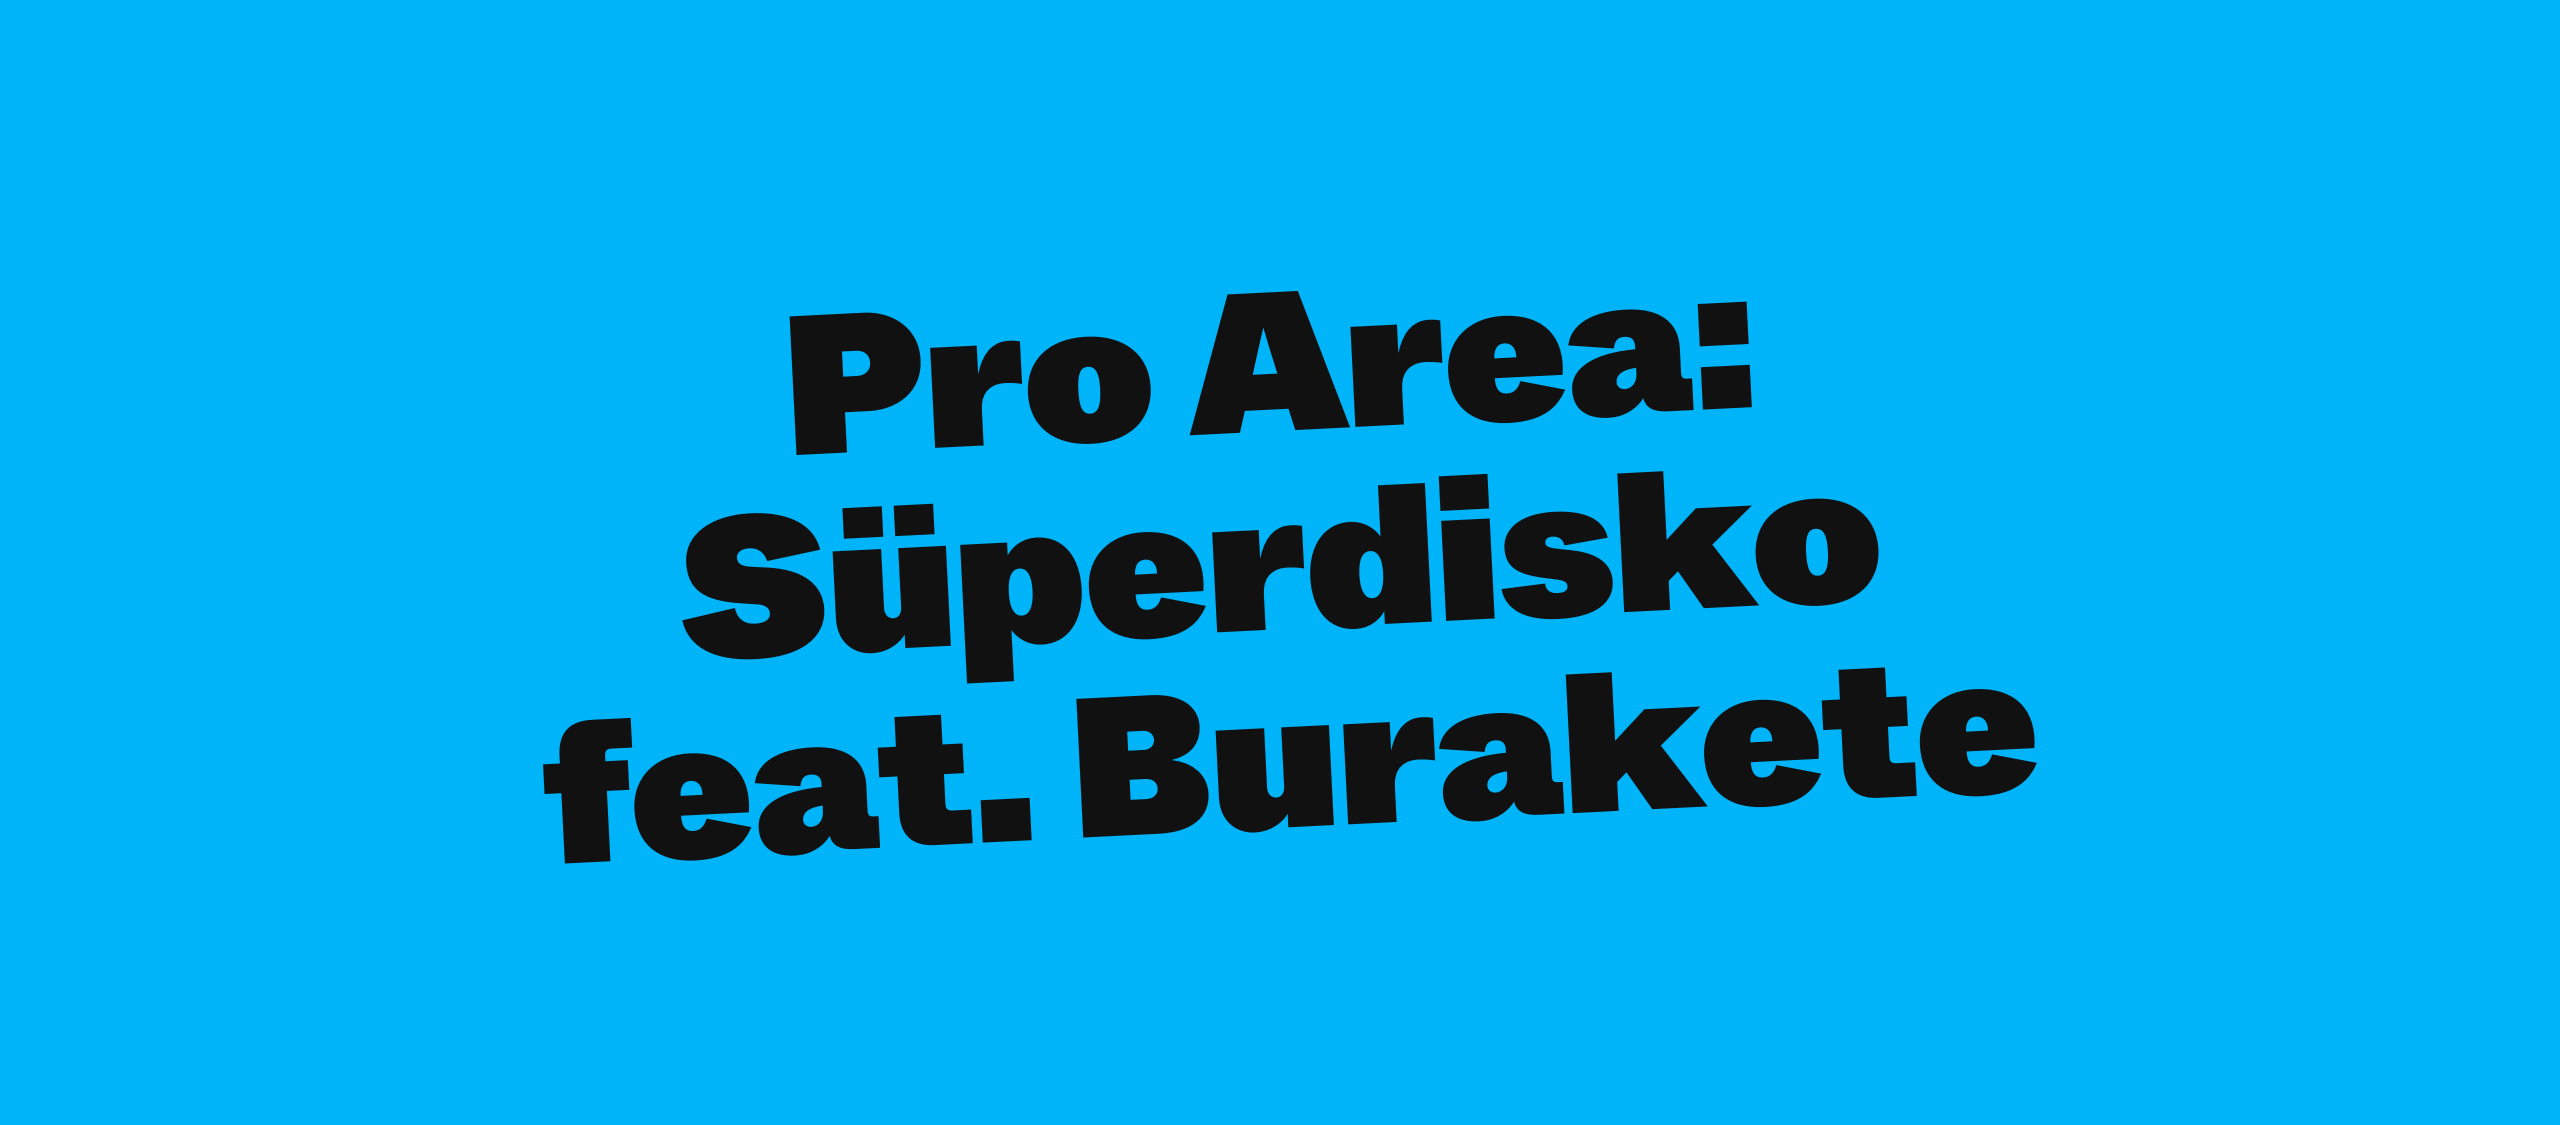 Pro Area: Süperdisko feat. Burakete